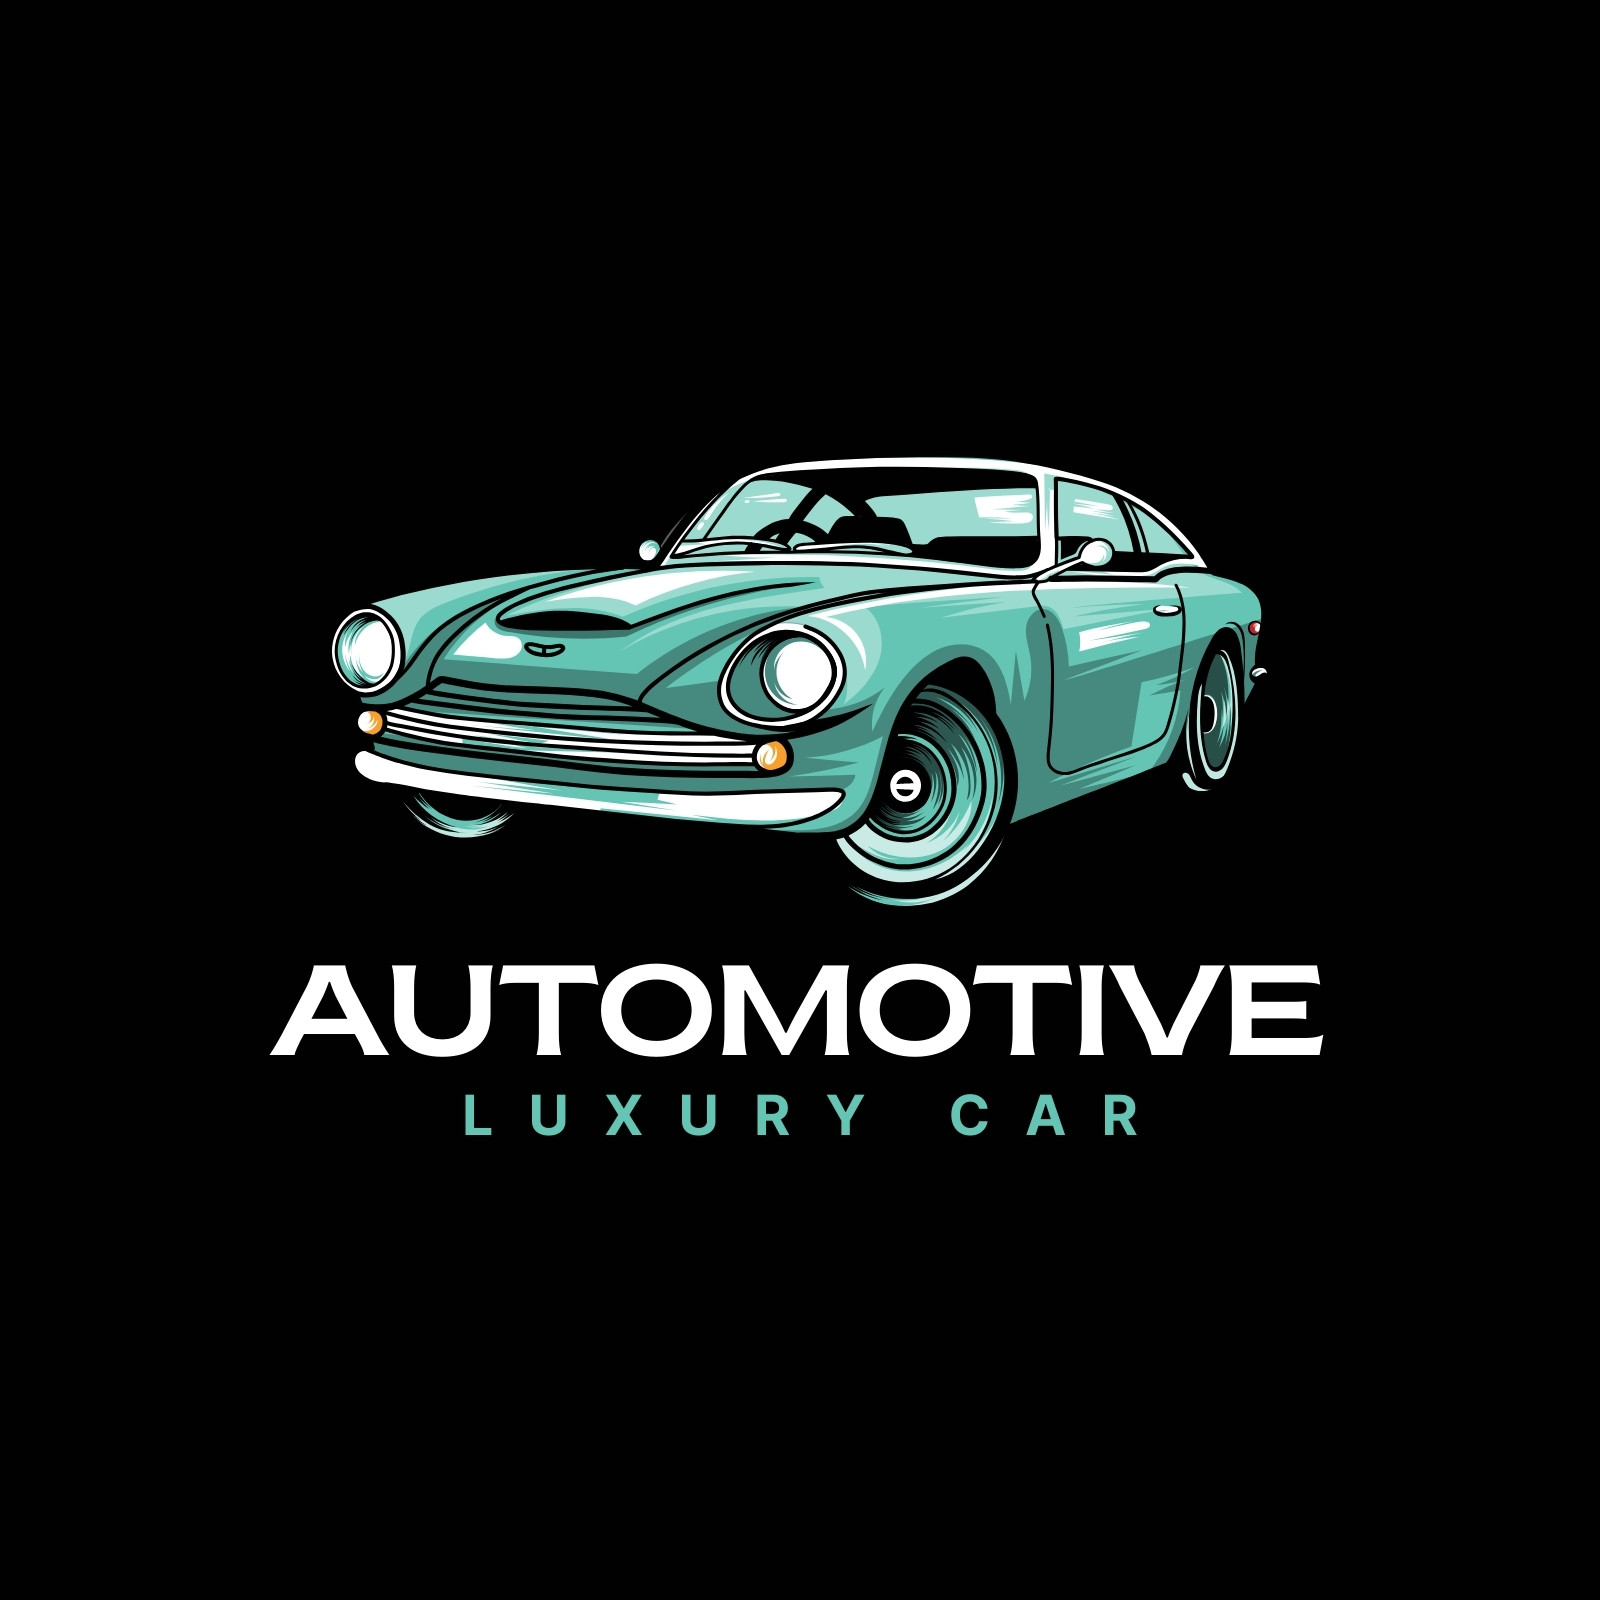 Green Abstract Illustrative Automotive Car Logo